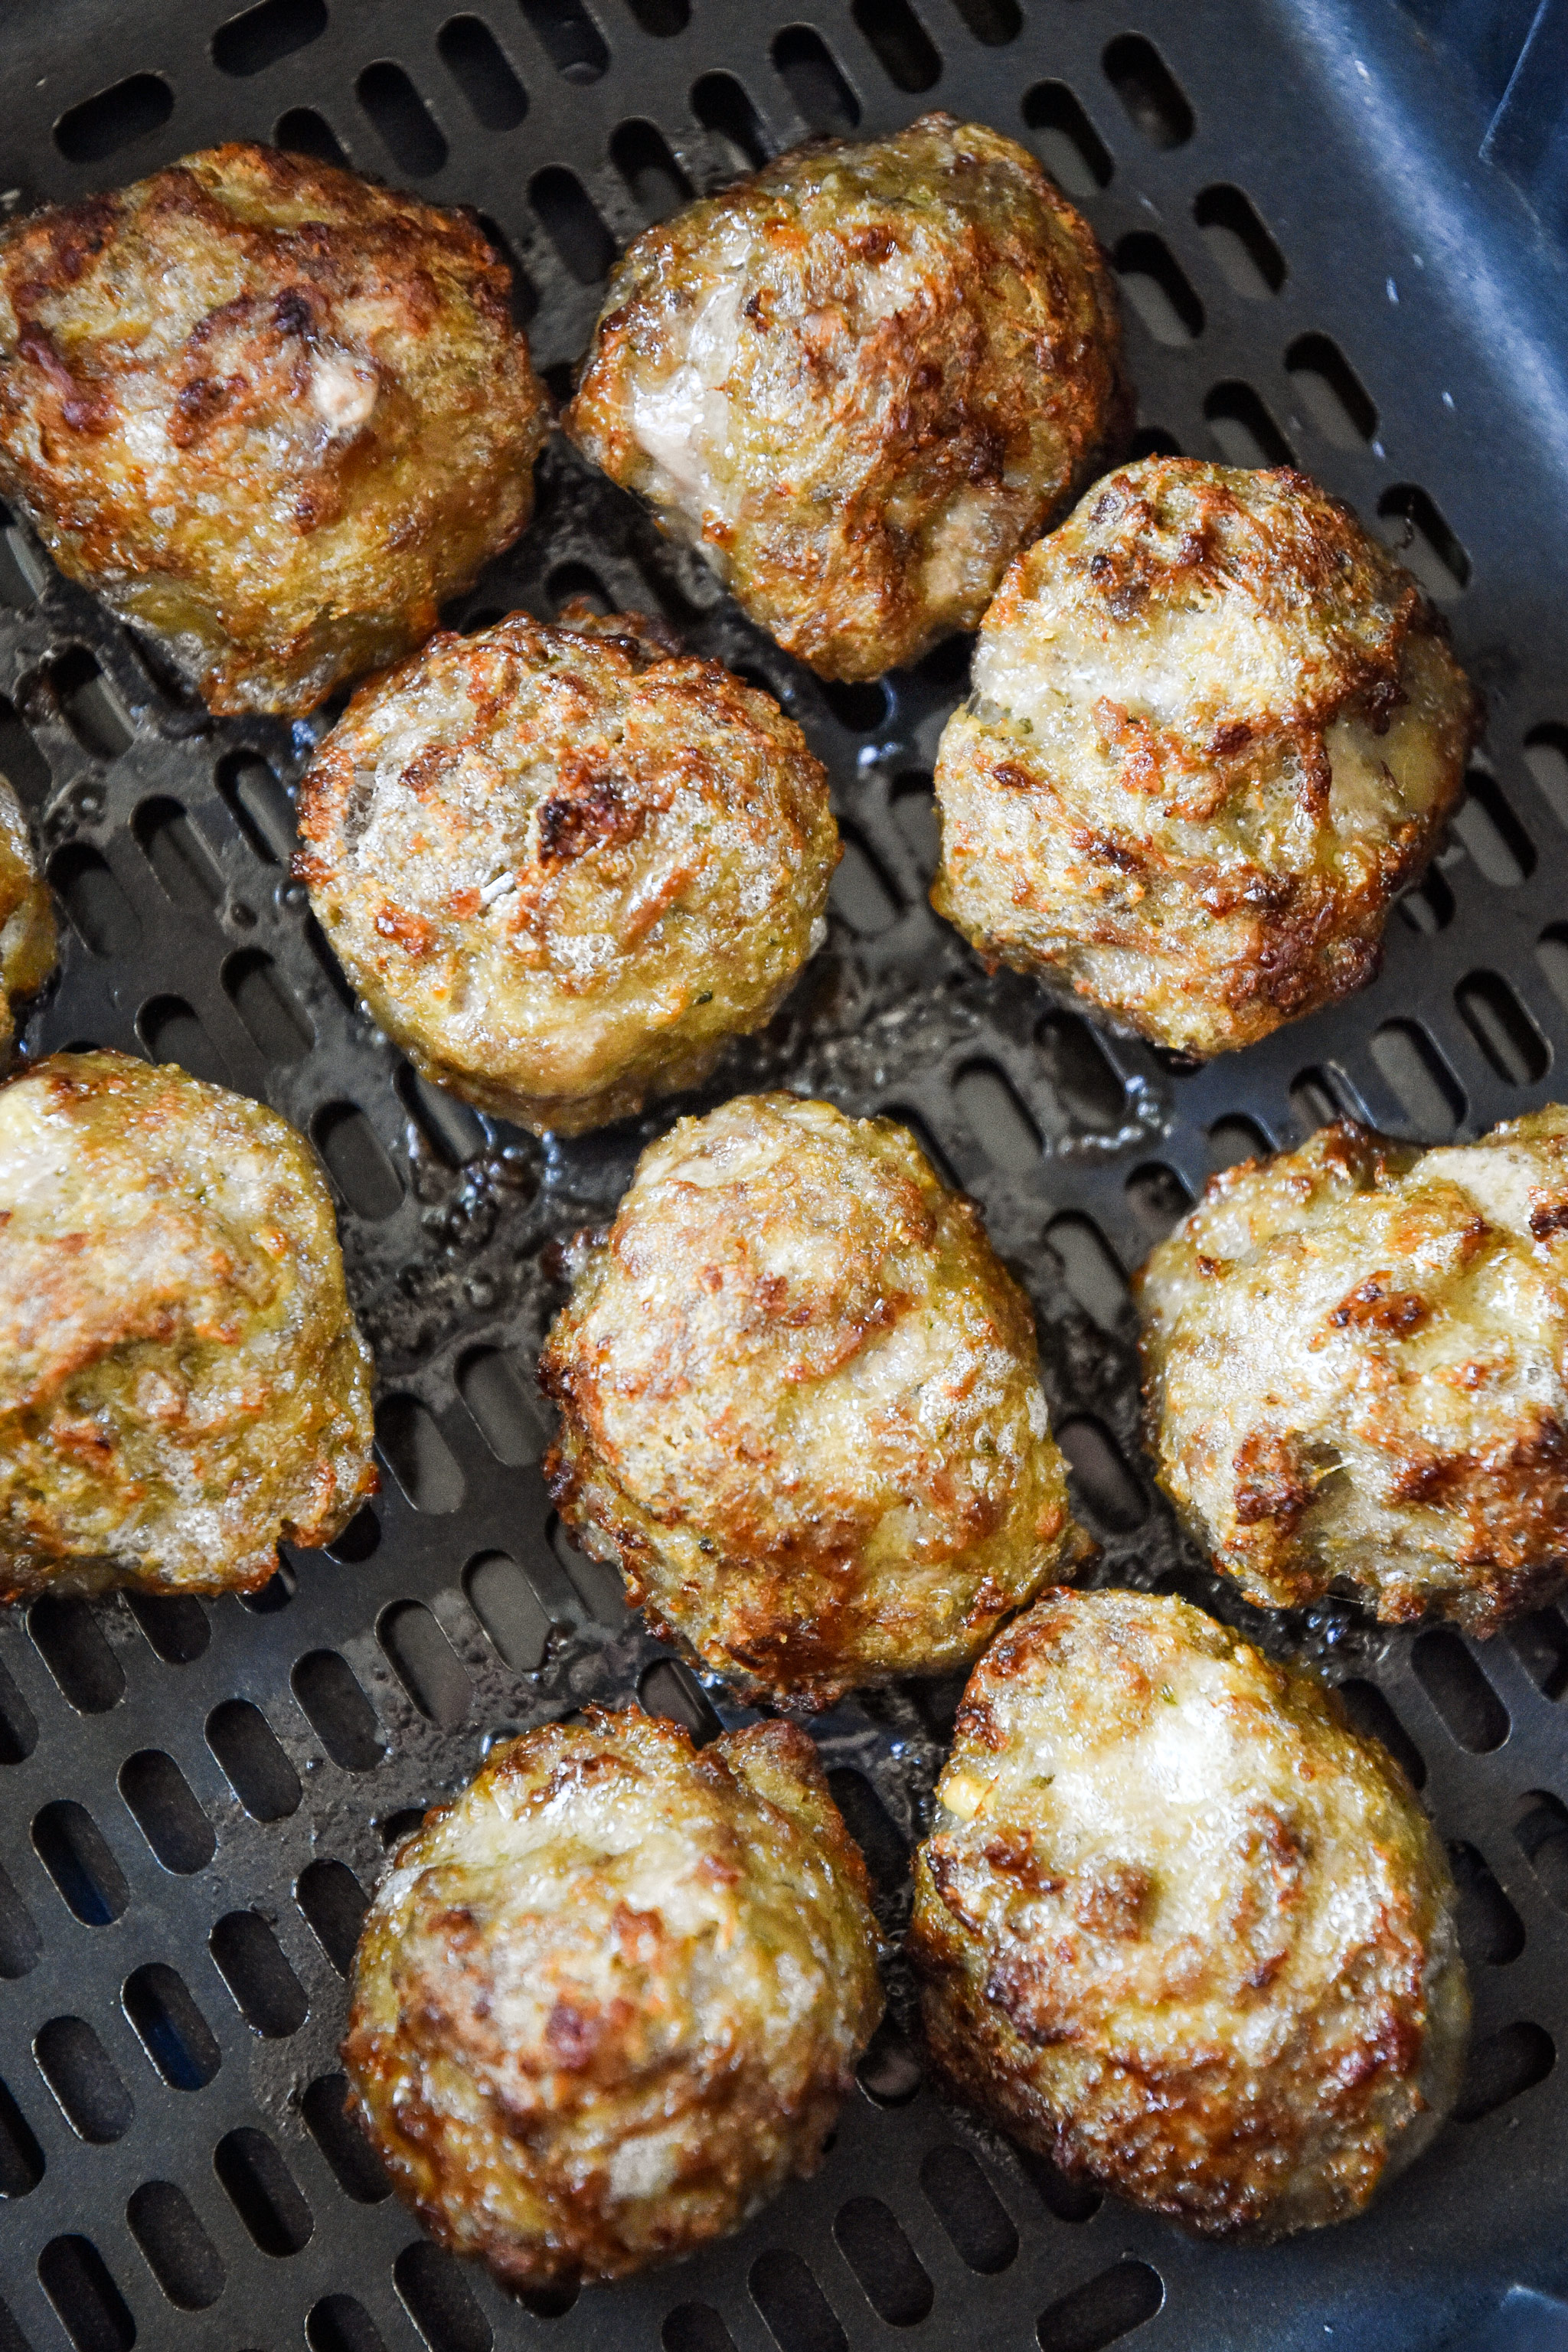 meatballs freshly cooked in an air fryer.